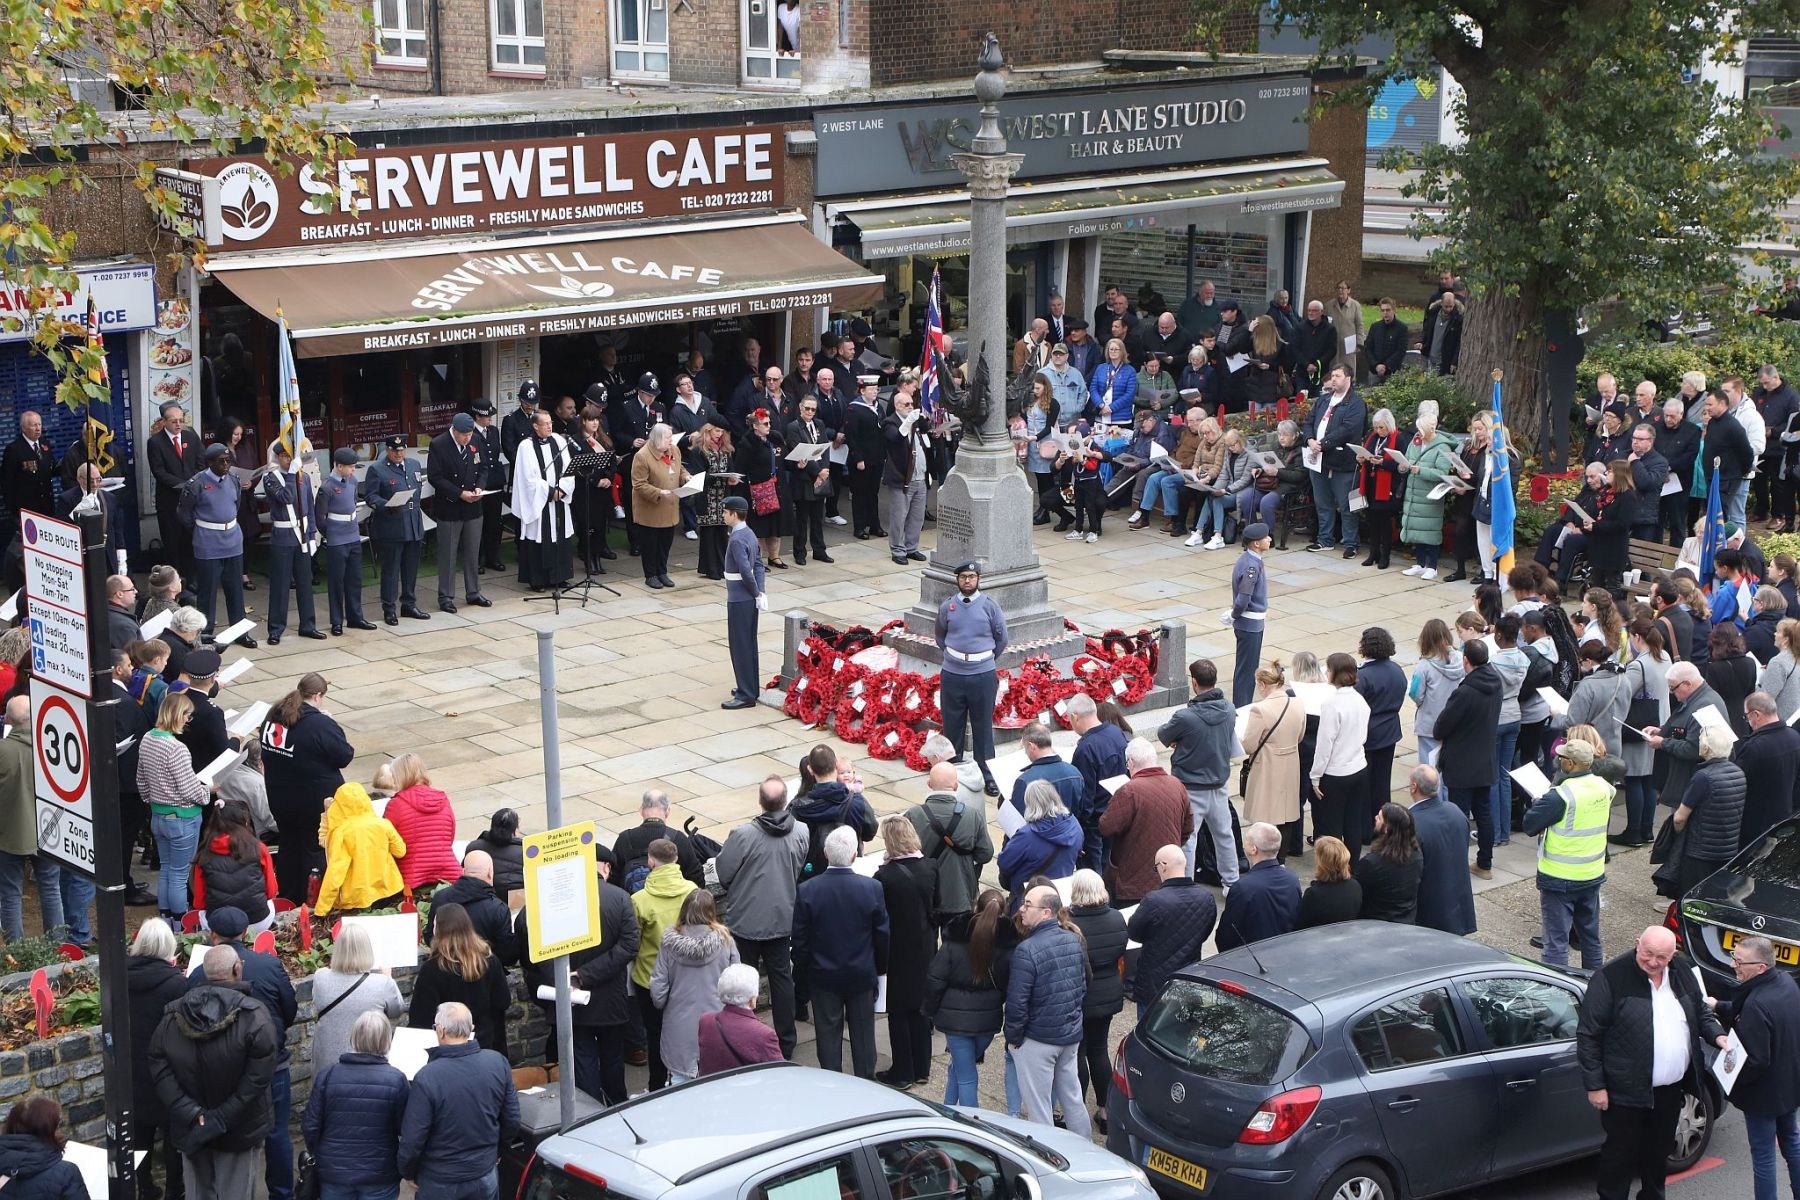 Bermondsey West Lane War Memorial, Remembrance Sunday 2022